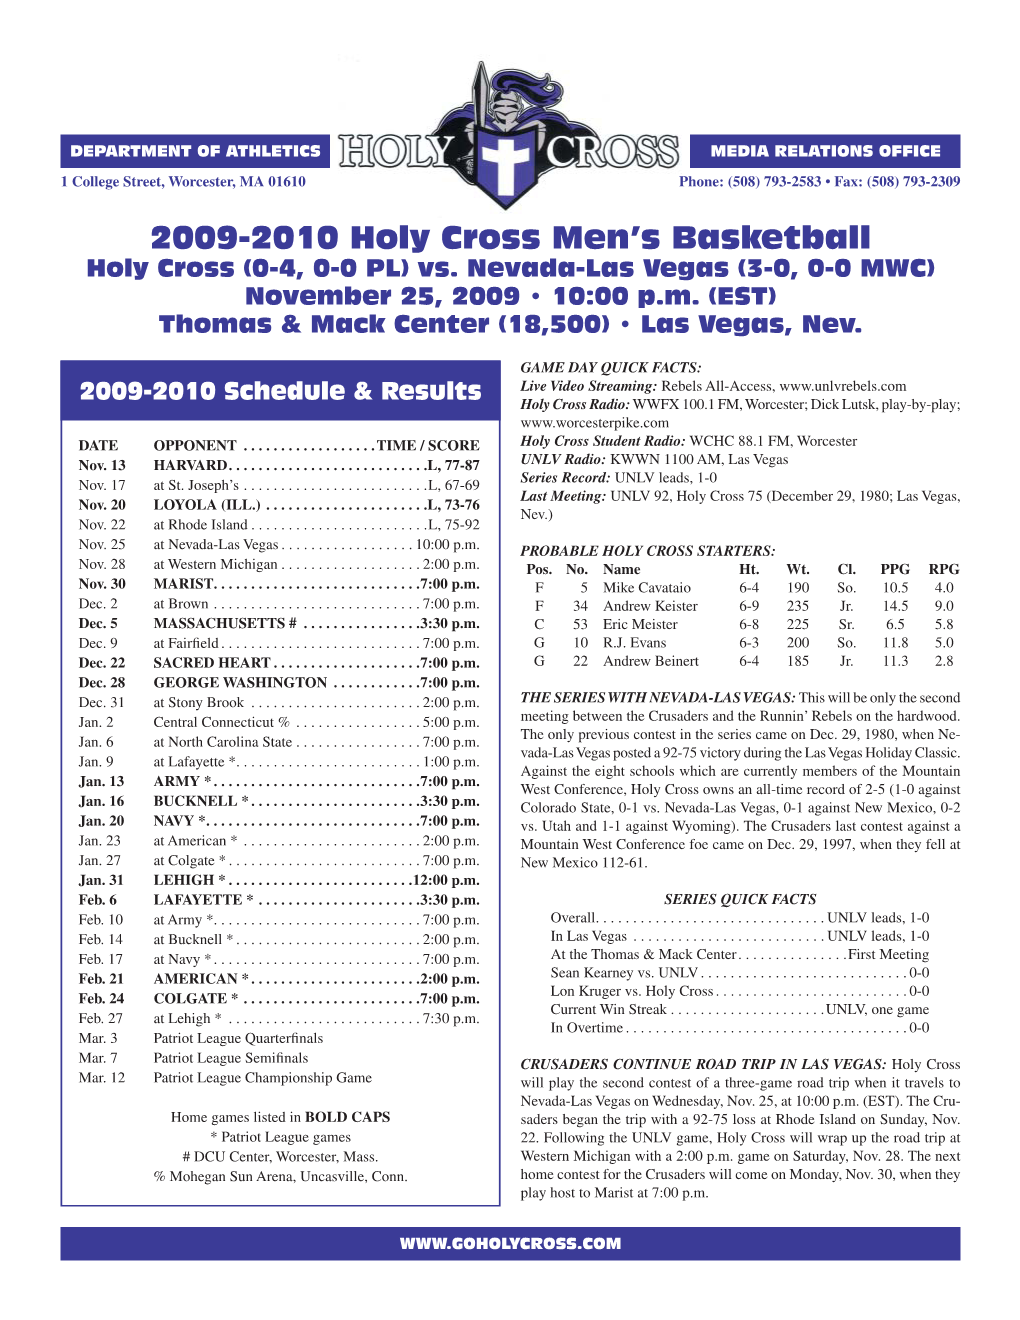 2009-2010 Holy Cross Men's Basketball Holy Cross Season Box Score (As of Nov 23, 2009) All Games